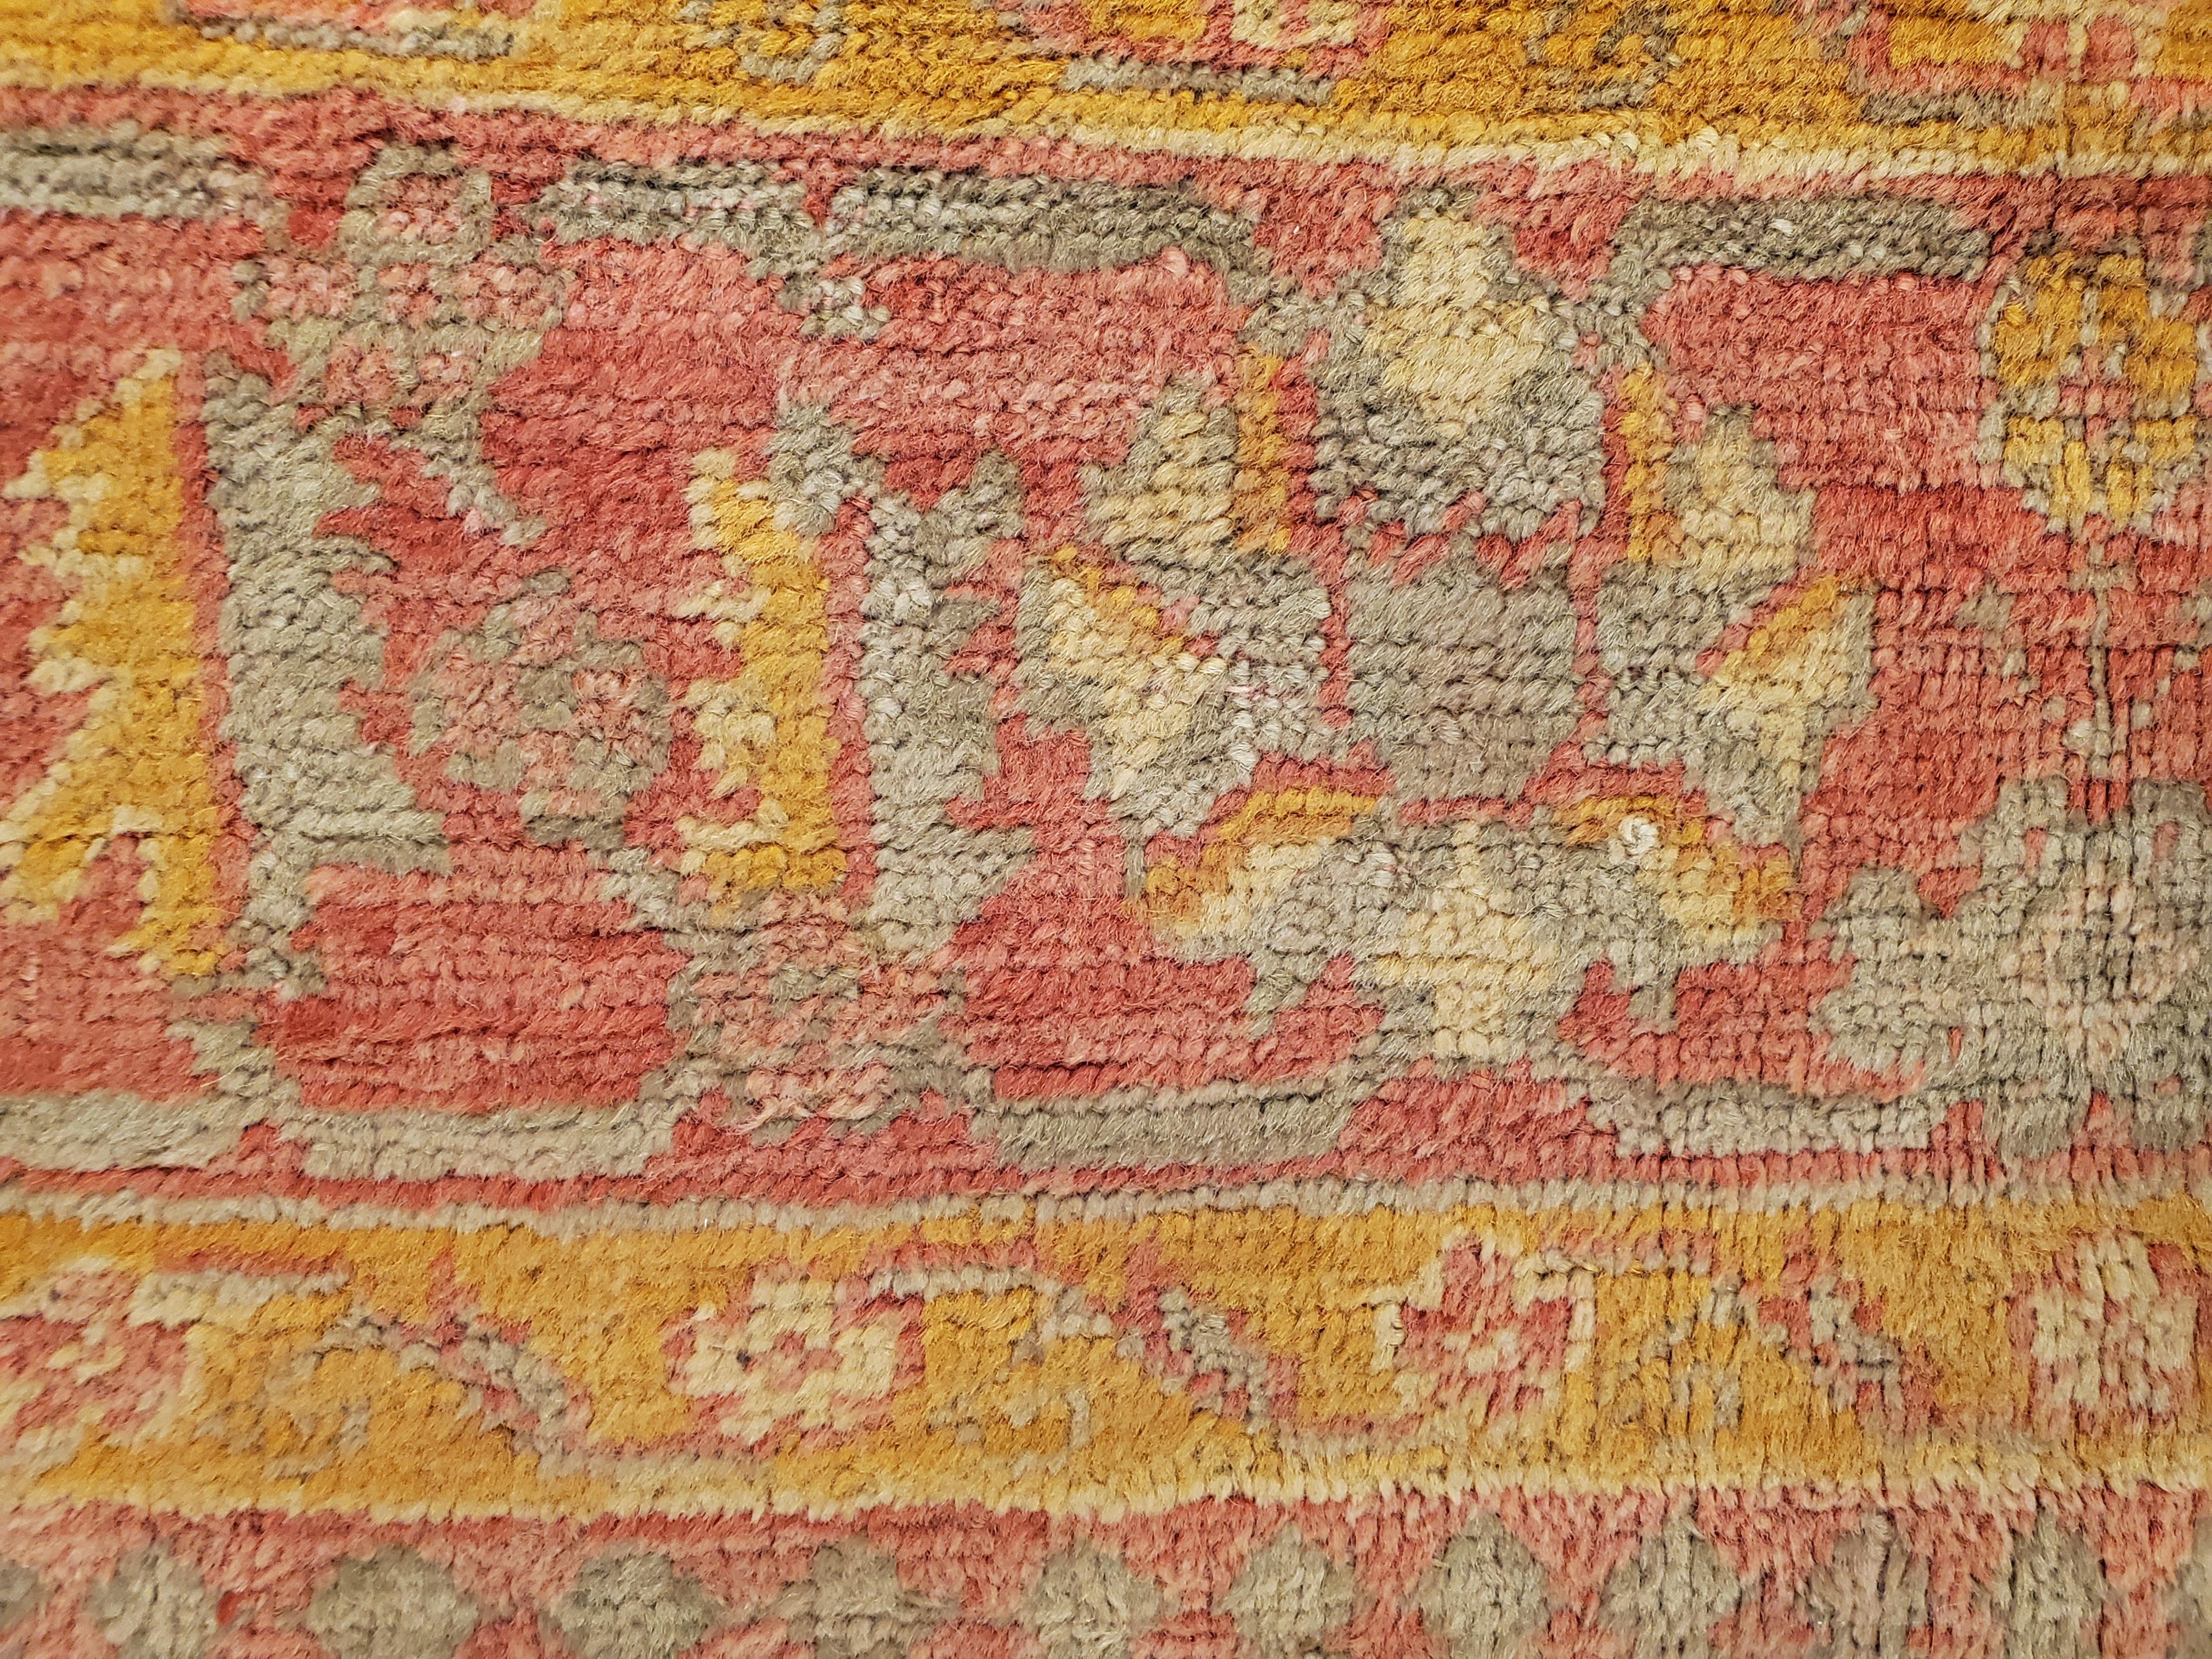 Antique Oushak Carpet, Handmade Turkish Oriental Rug, Saffron, Coral, Light Blue For Sale 2